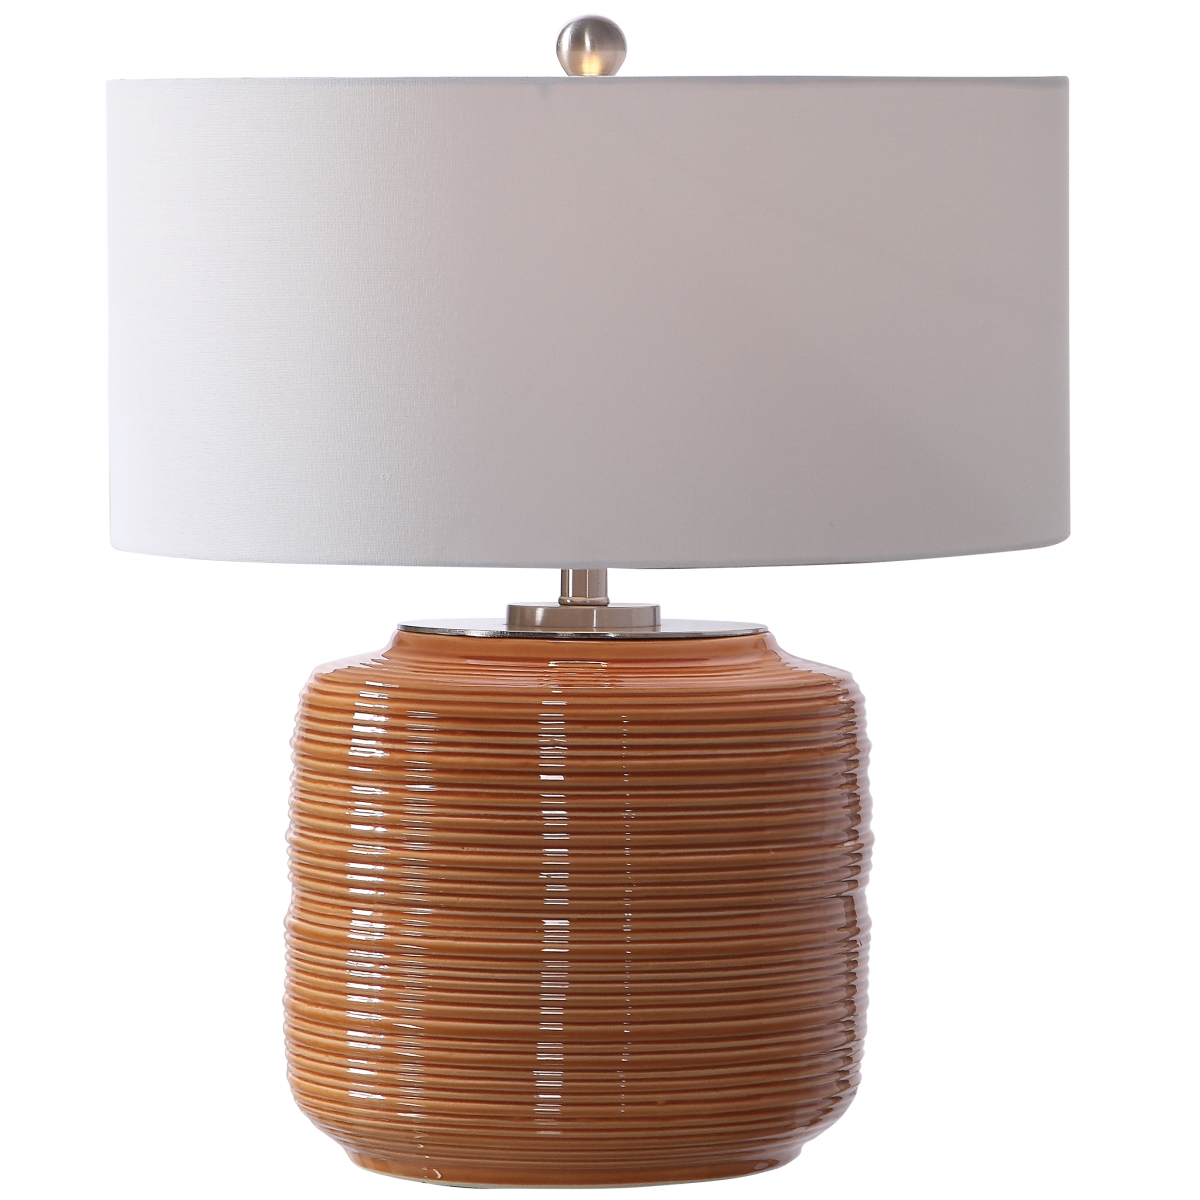 Picture of 212 Main 26388-1 Solene Orange Table Lamp